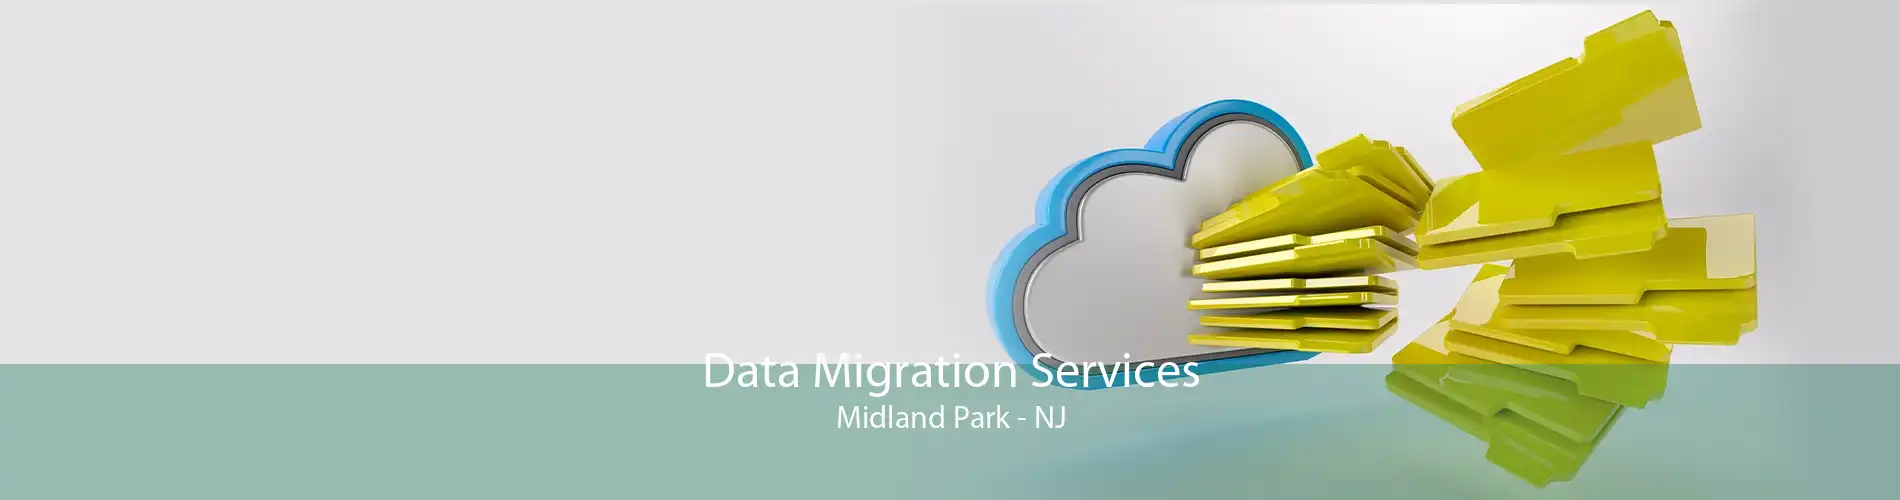 Data Migration Services Midland Park - NJ